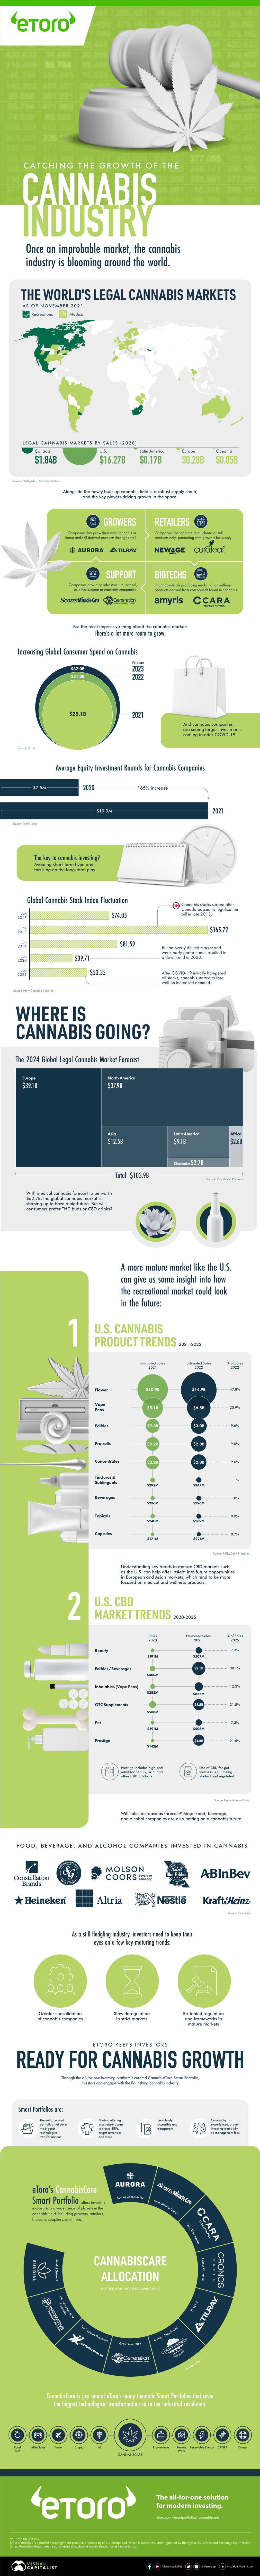 Cannabis future infographic